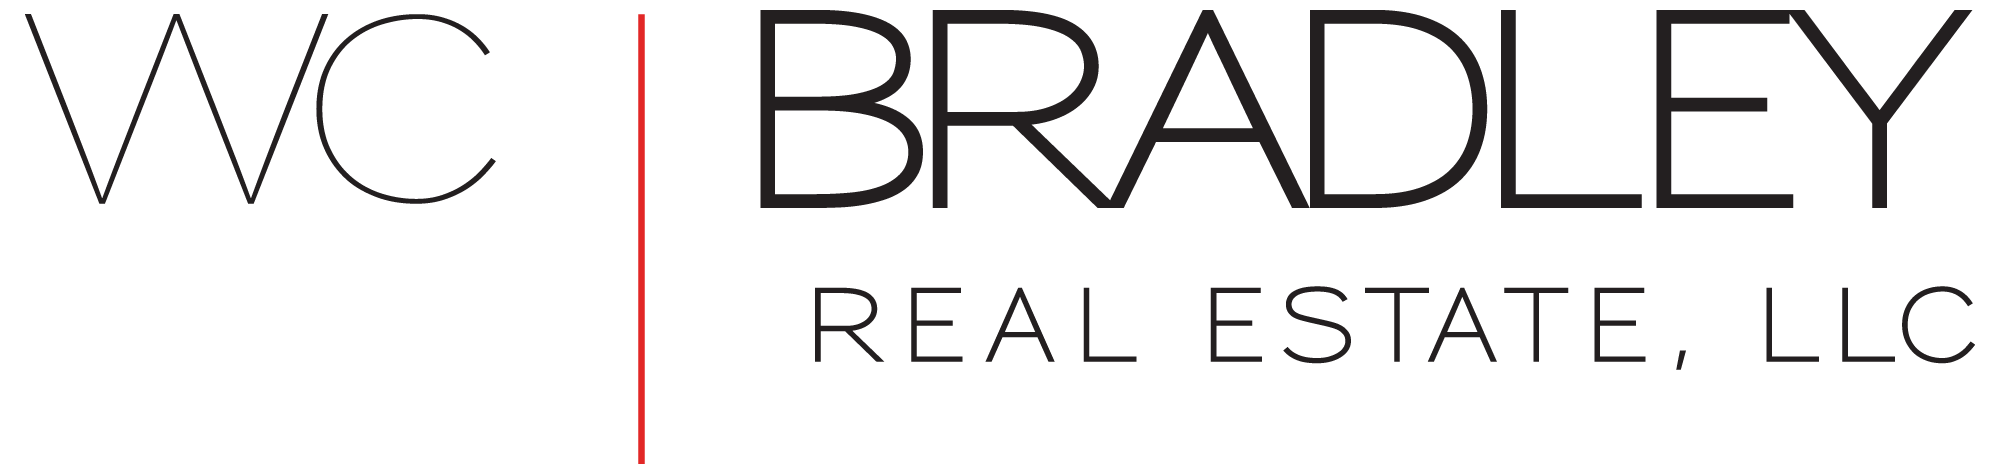 W.C. Bradley Real Estate